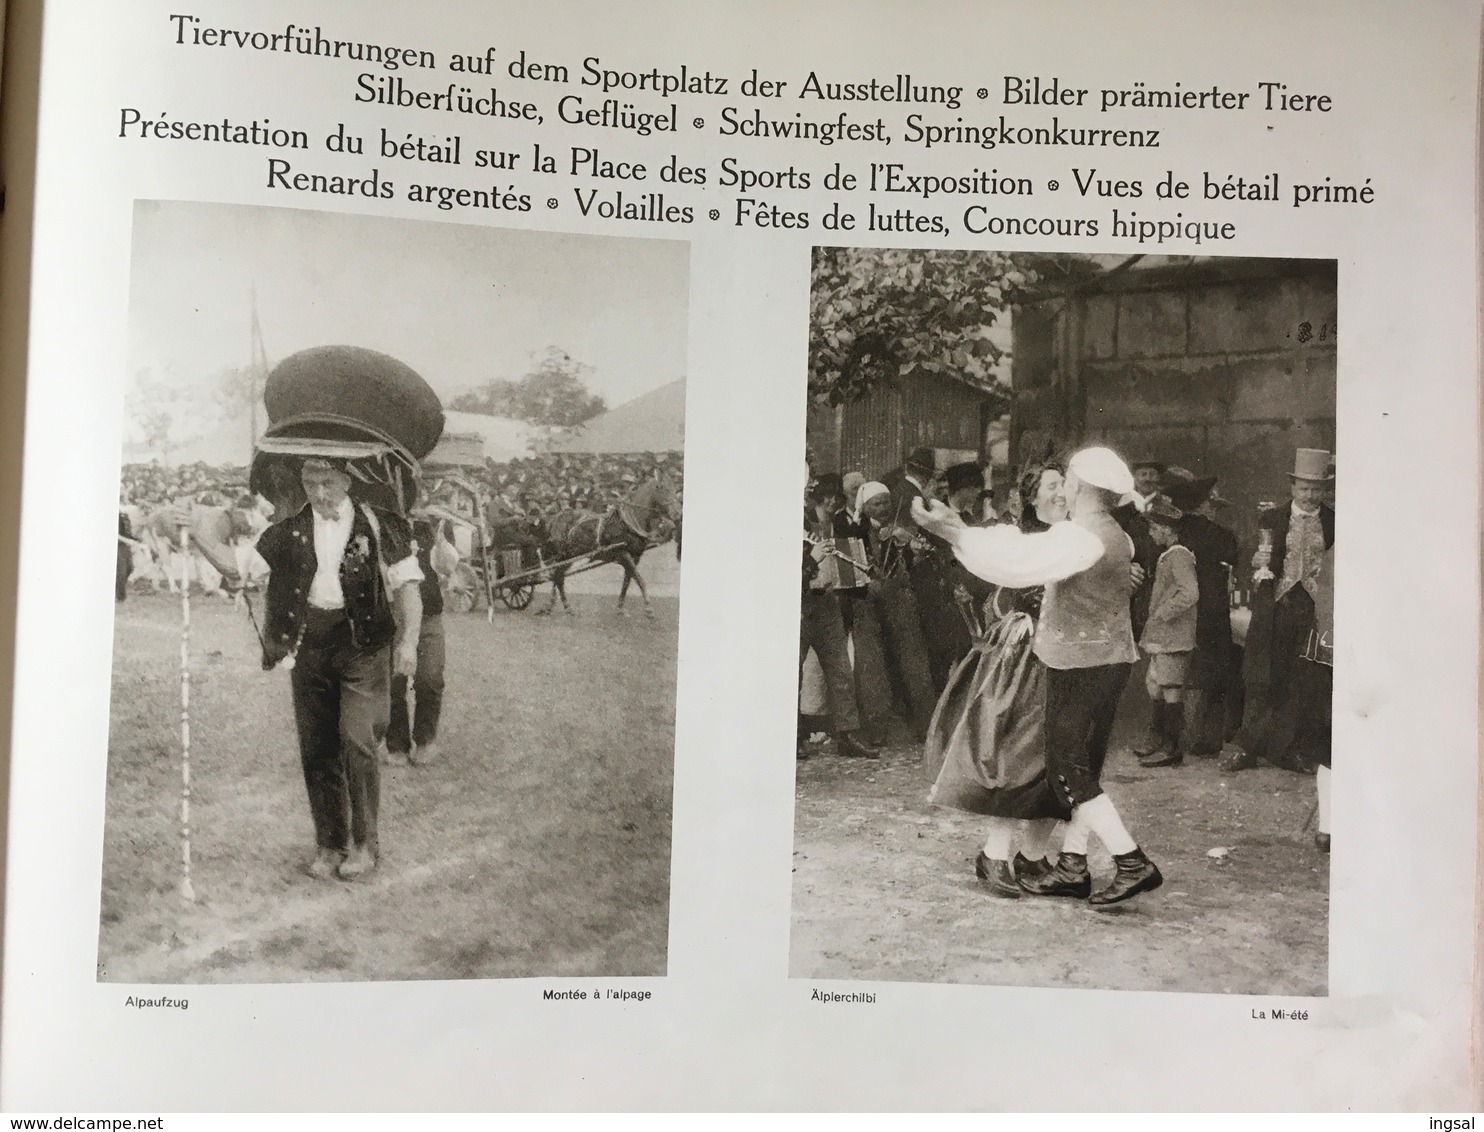 Schweiz, Landwirtschaftl, Ausstellung-Exposition Suisse d’Agriculture. Bern 1925